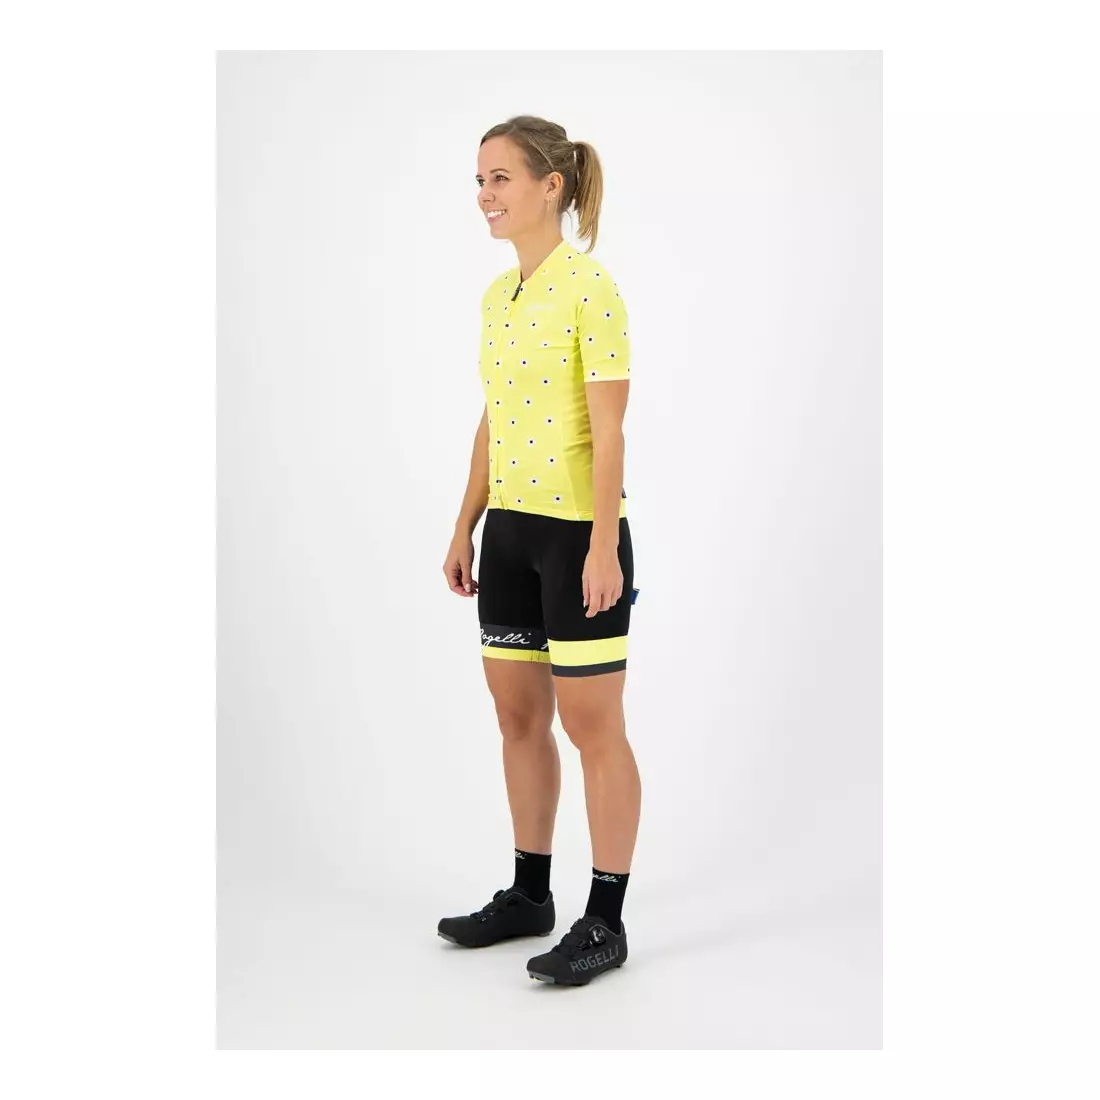 ROGELLI Dámský cyklistický dres DAISY žlutá